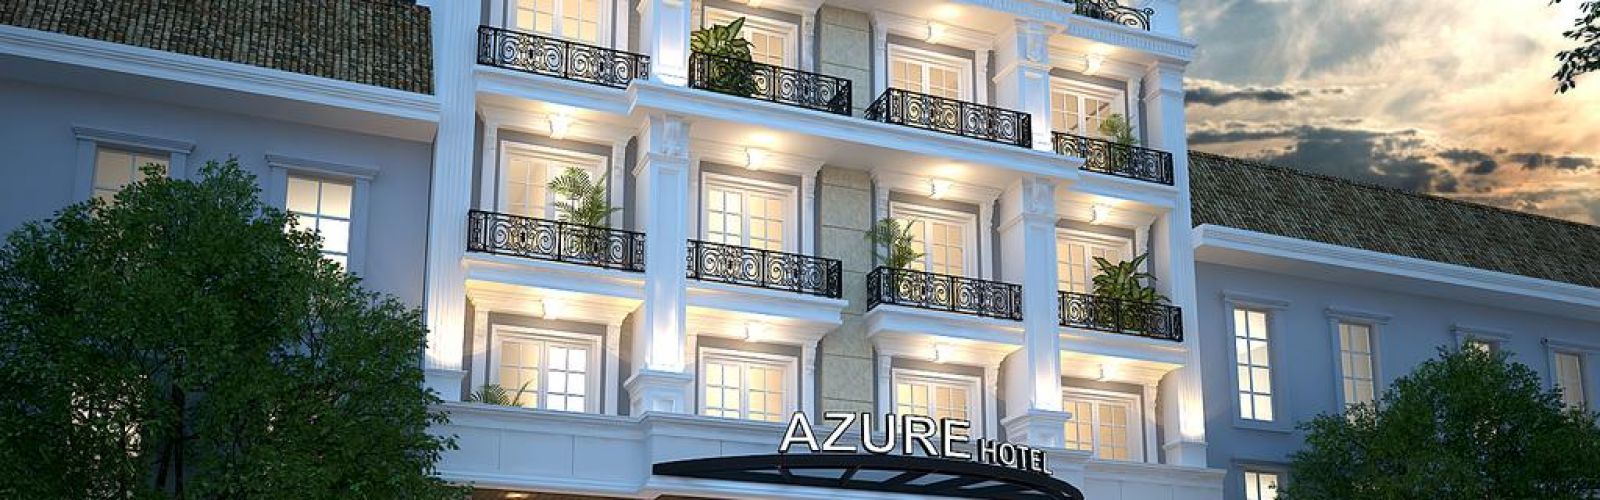 Azure Sapa Hotel